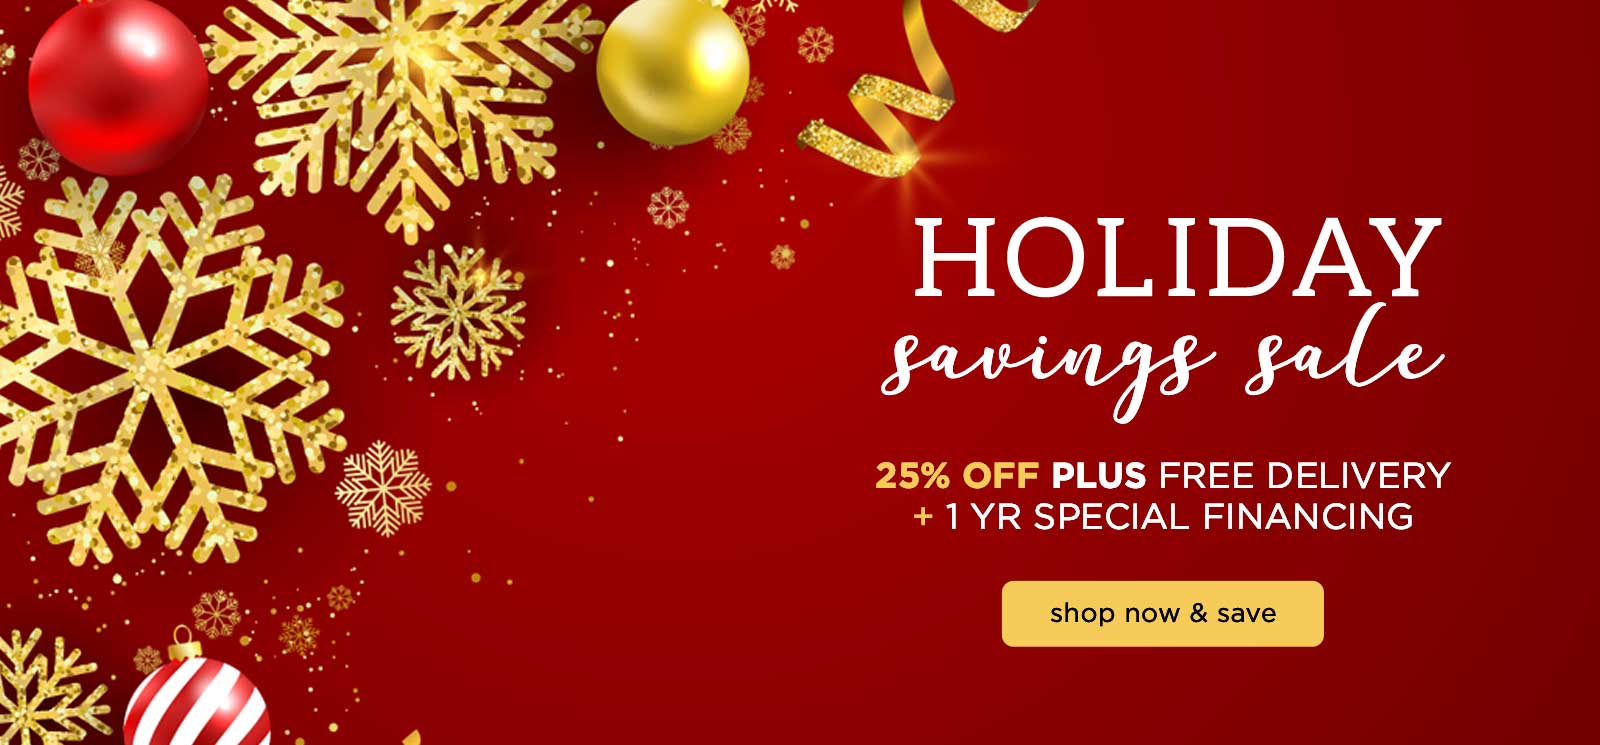 Holiday Savings Sale